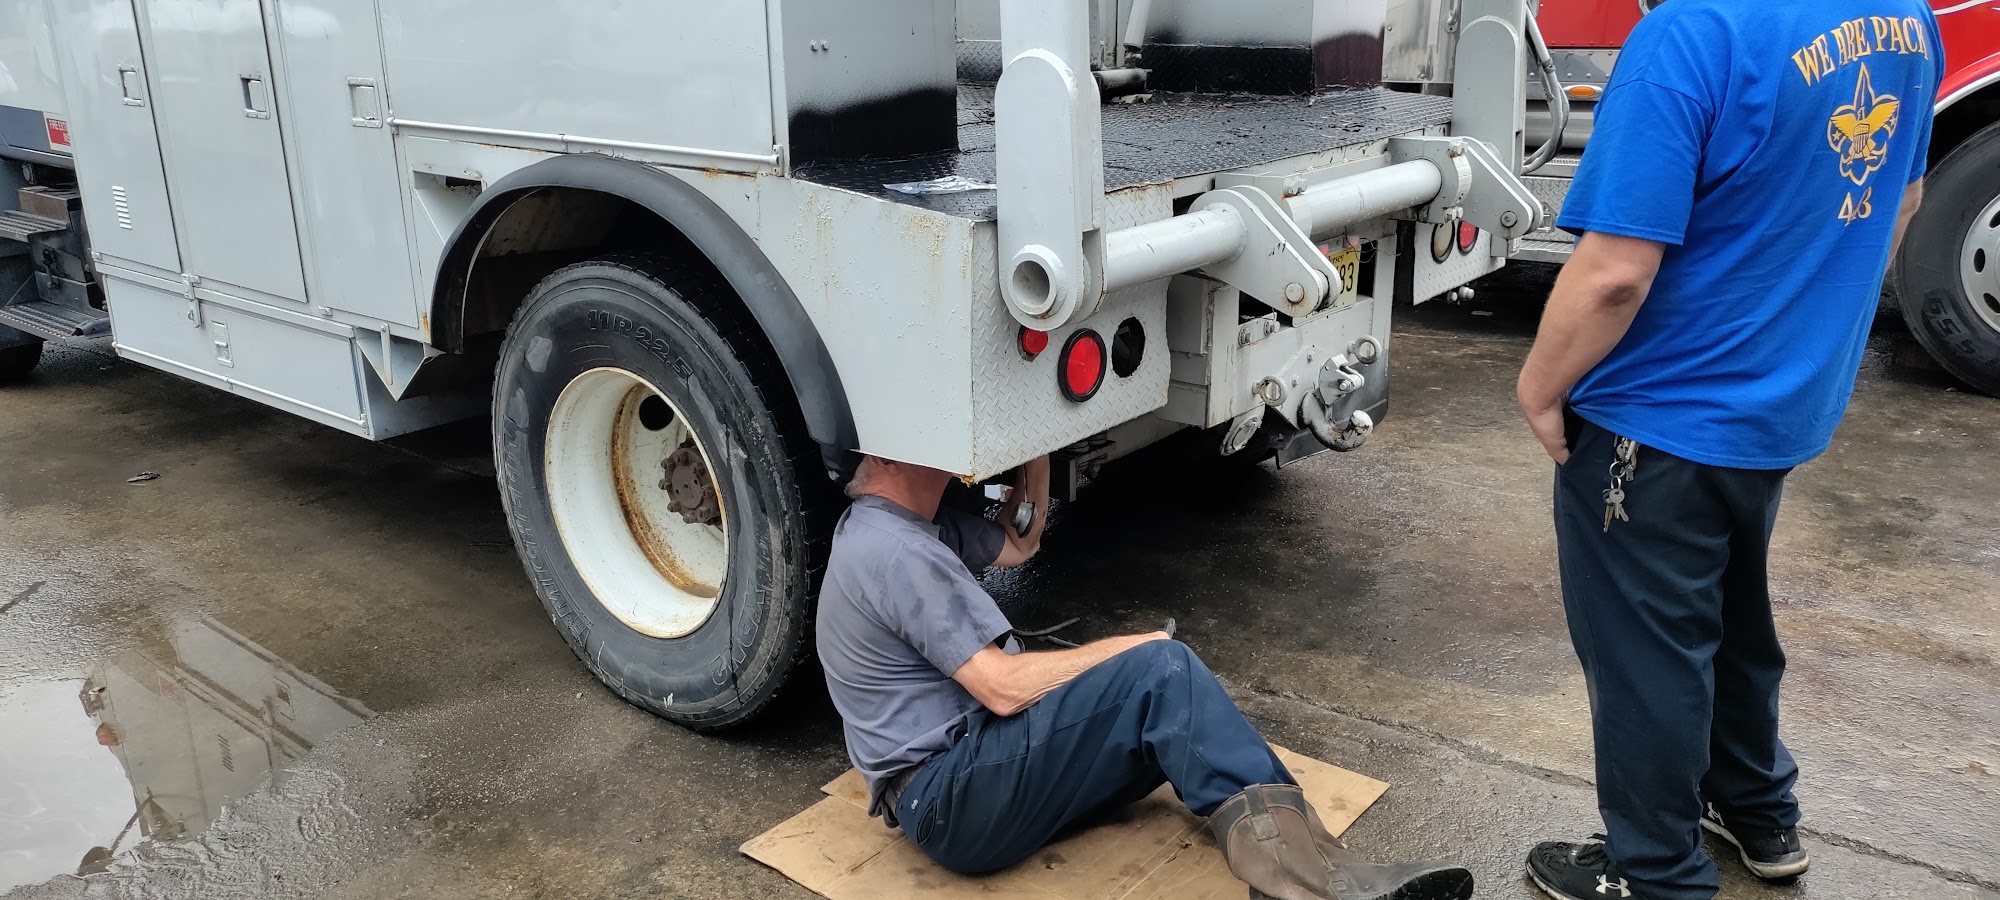 41 A Truck Repair